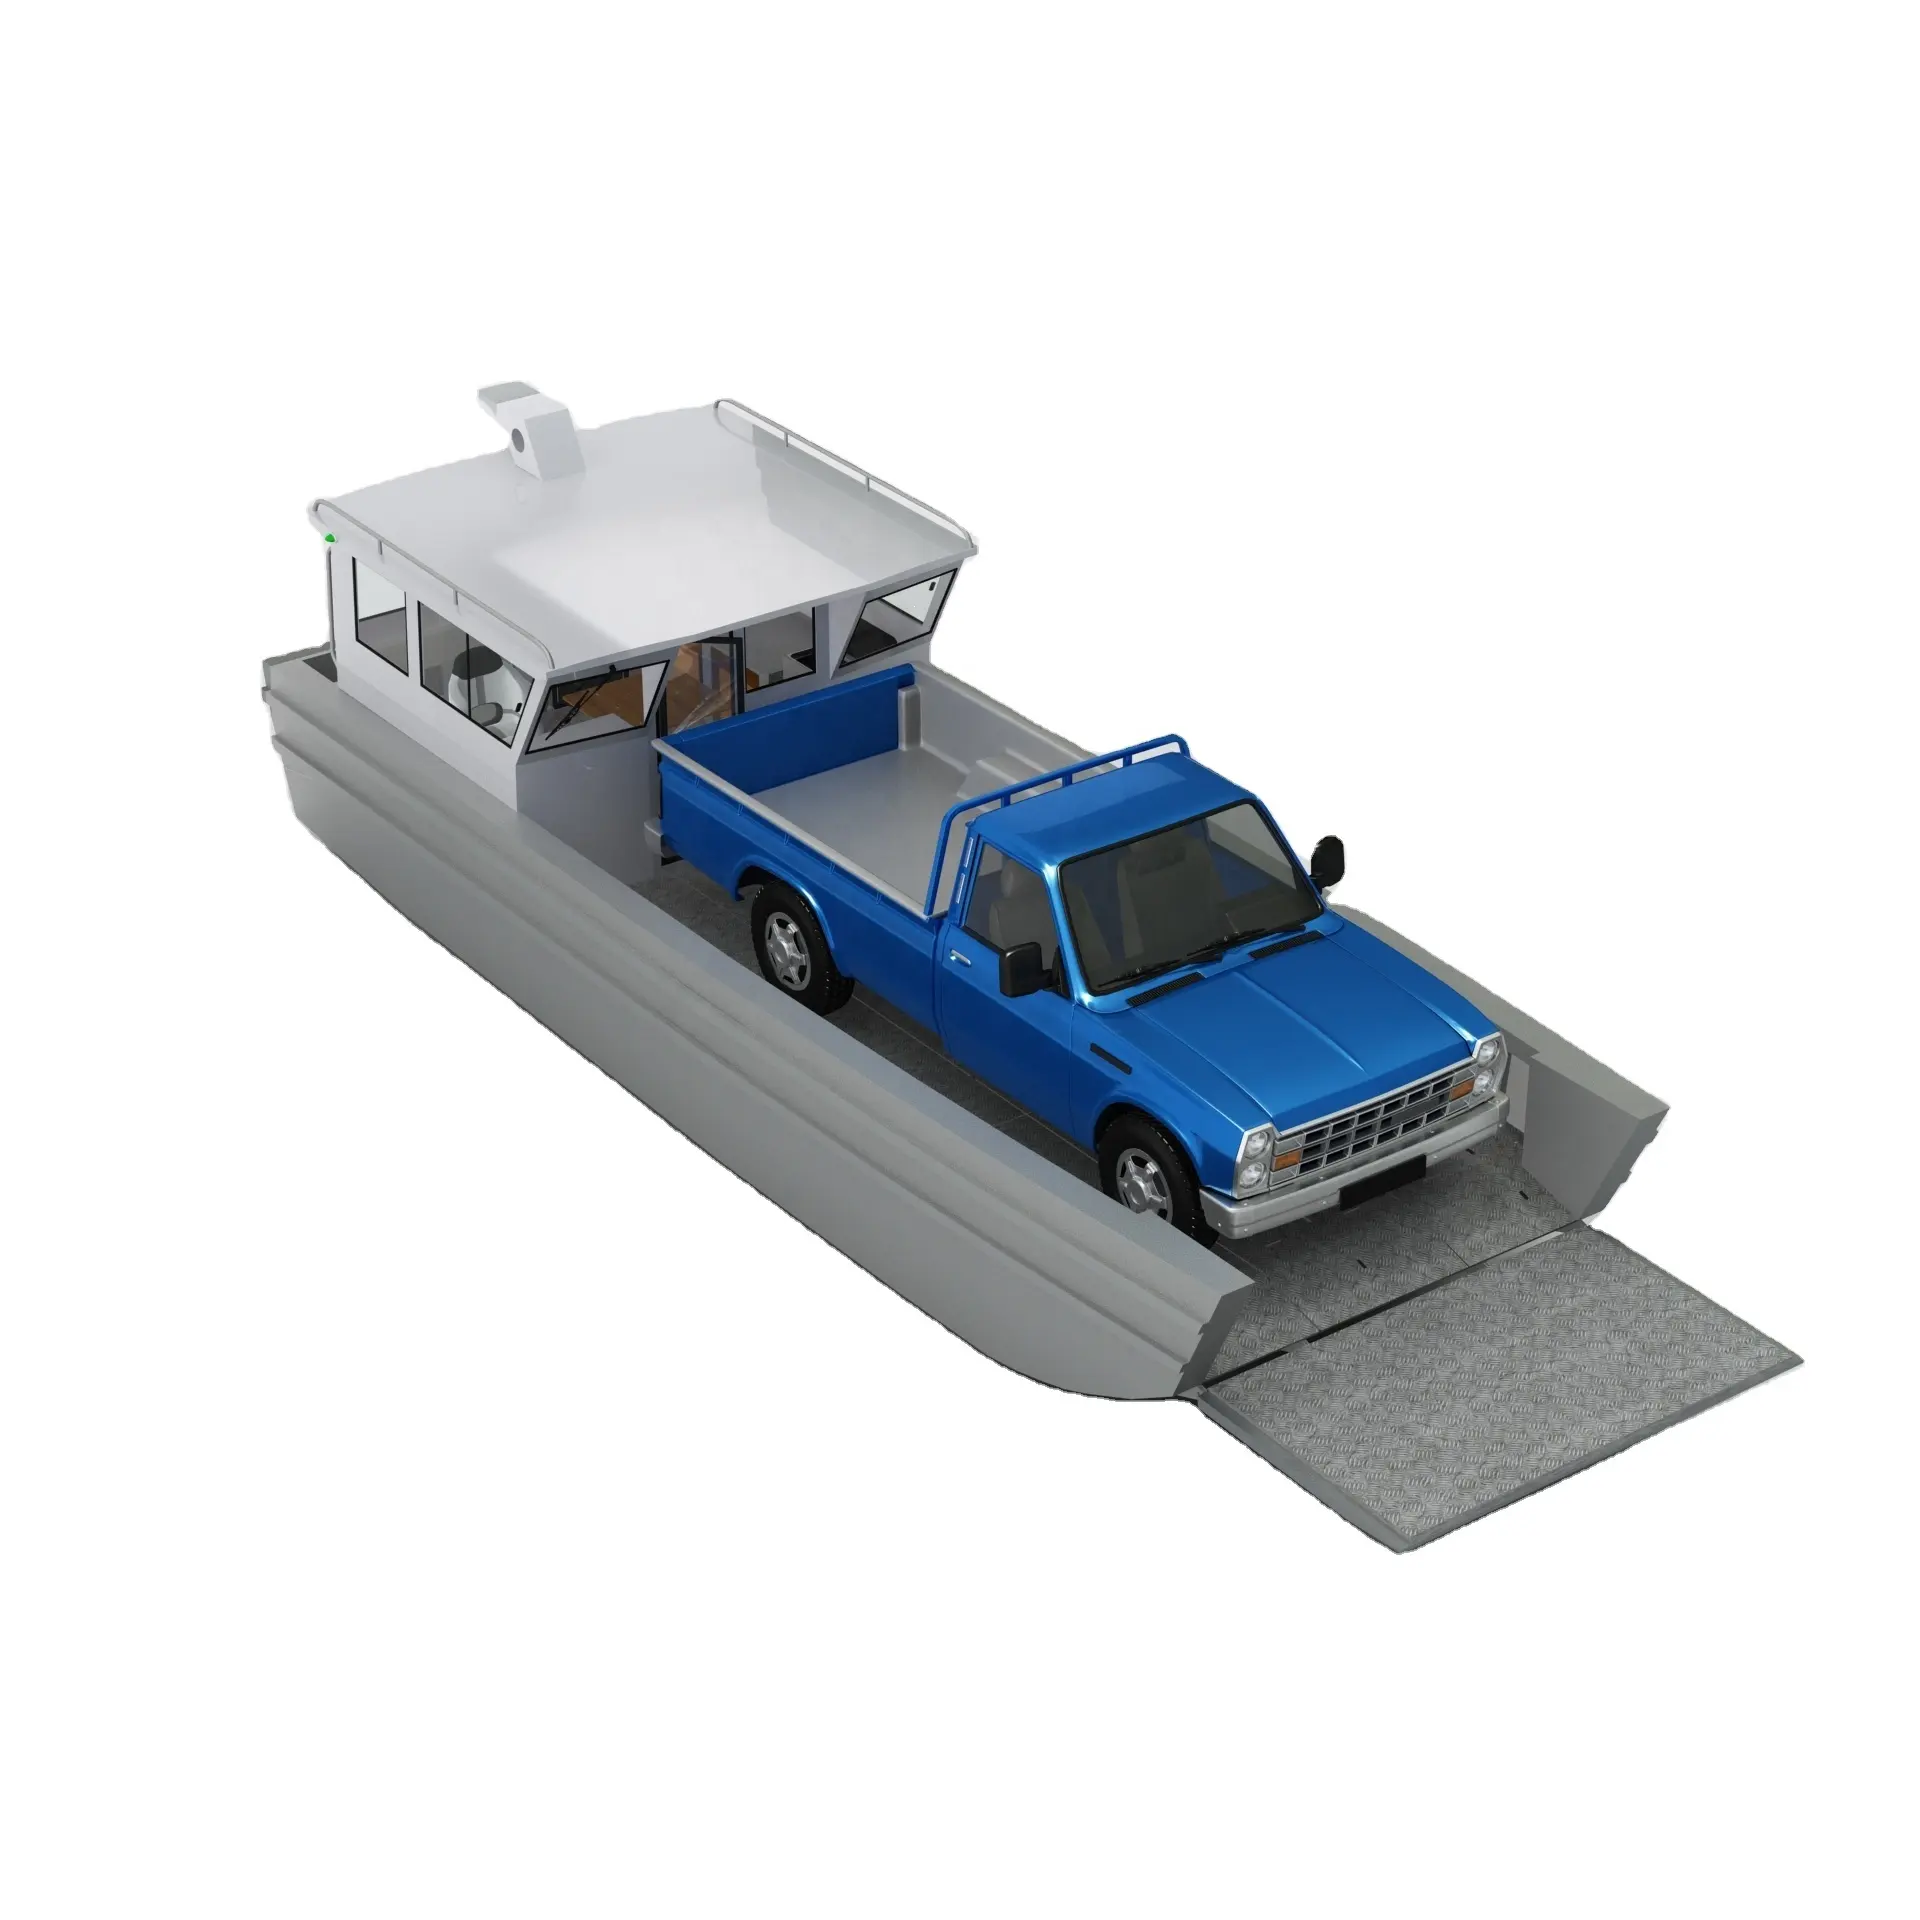 10m 33ft Aluminum Alloy Plate Cargo Work Landing Craft Boat for Sale